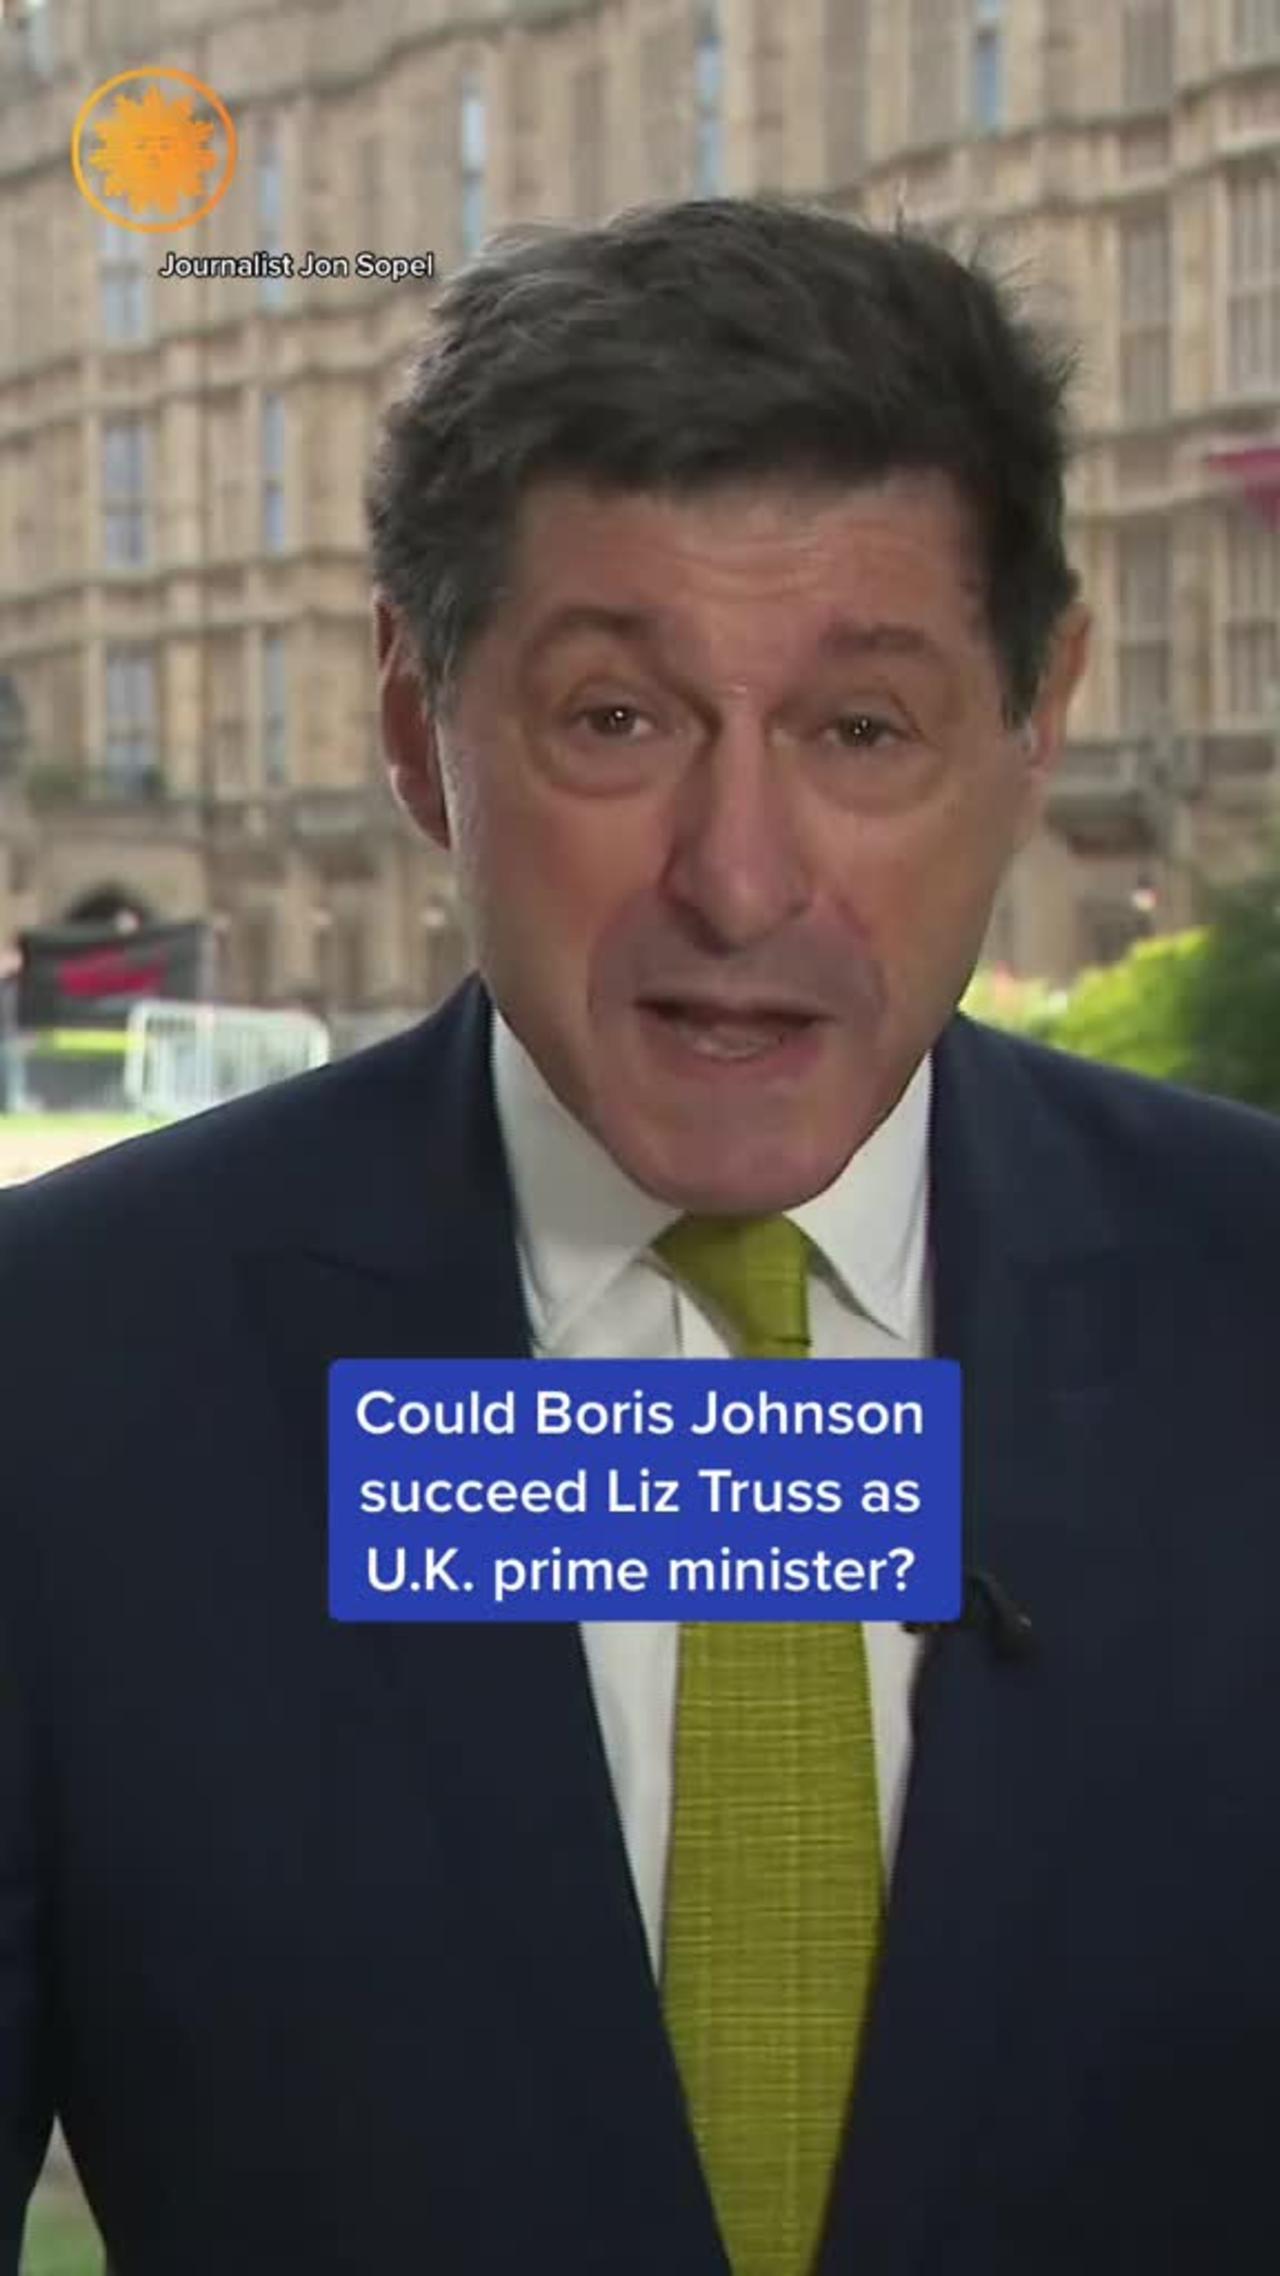 Could Boris Johnson succeed Liz Truss as U.K. prime minister?